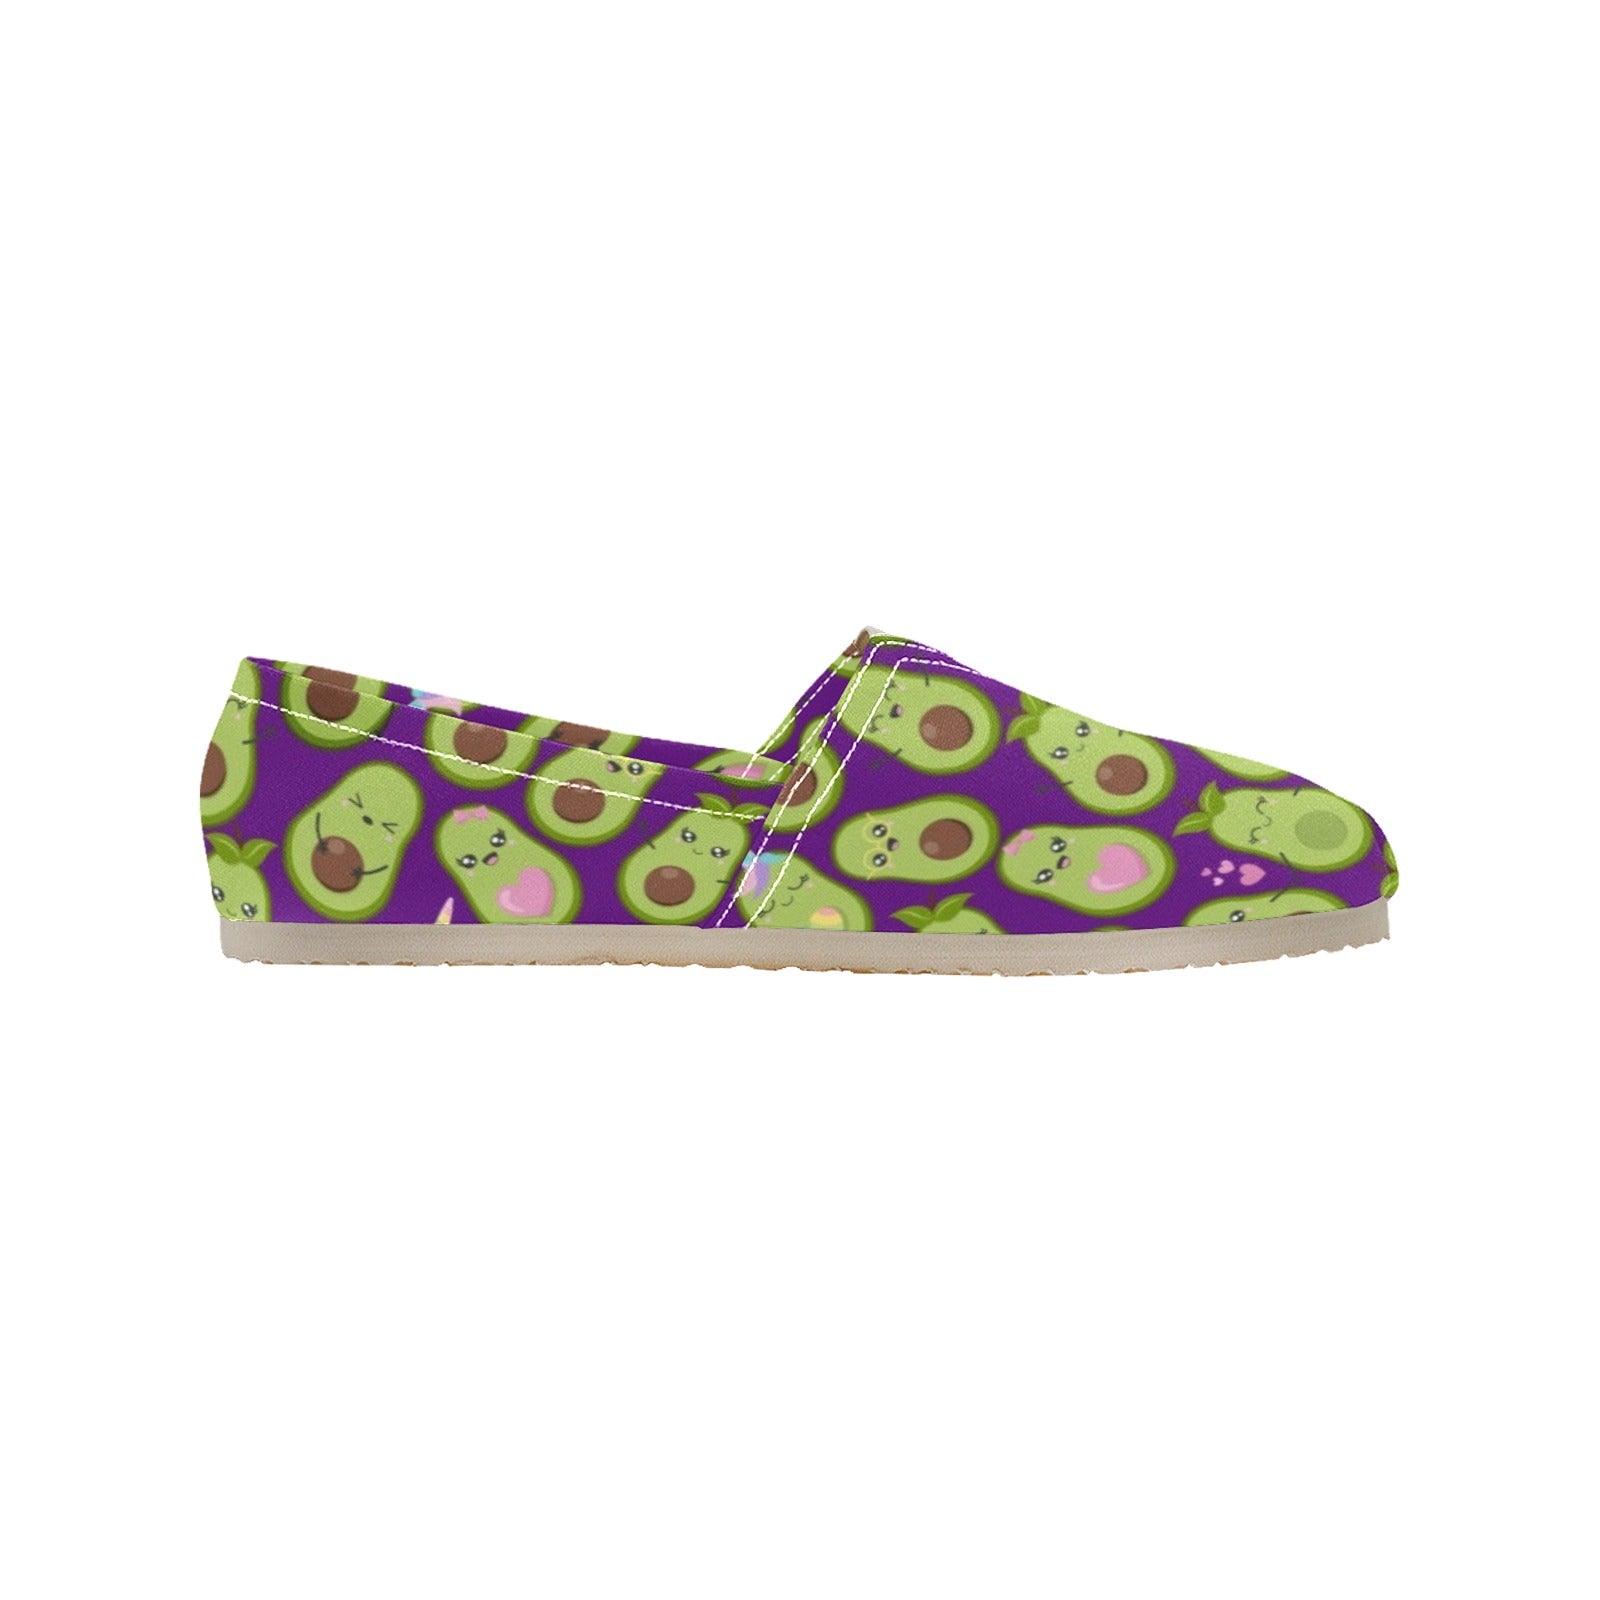 Avocado - Casual Canvas Slip-on Shoes